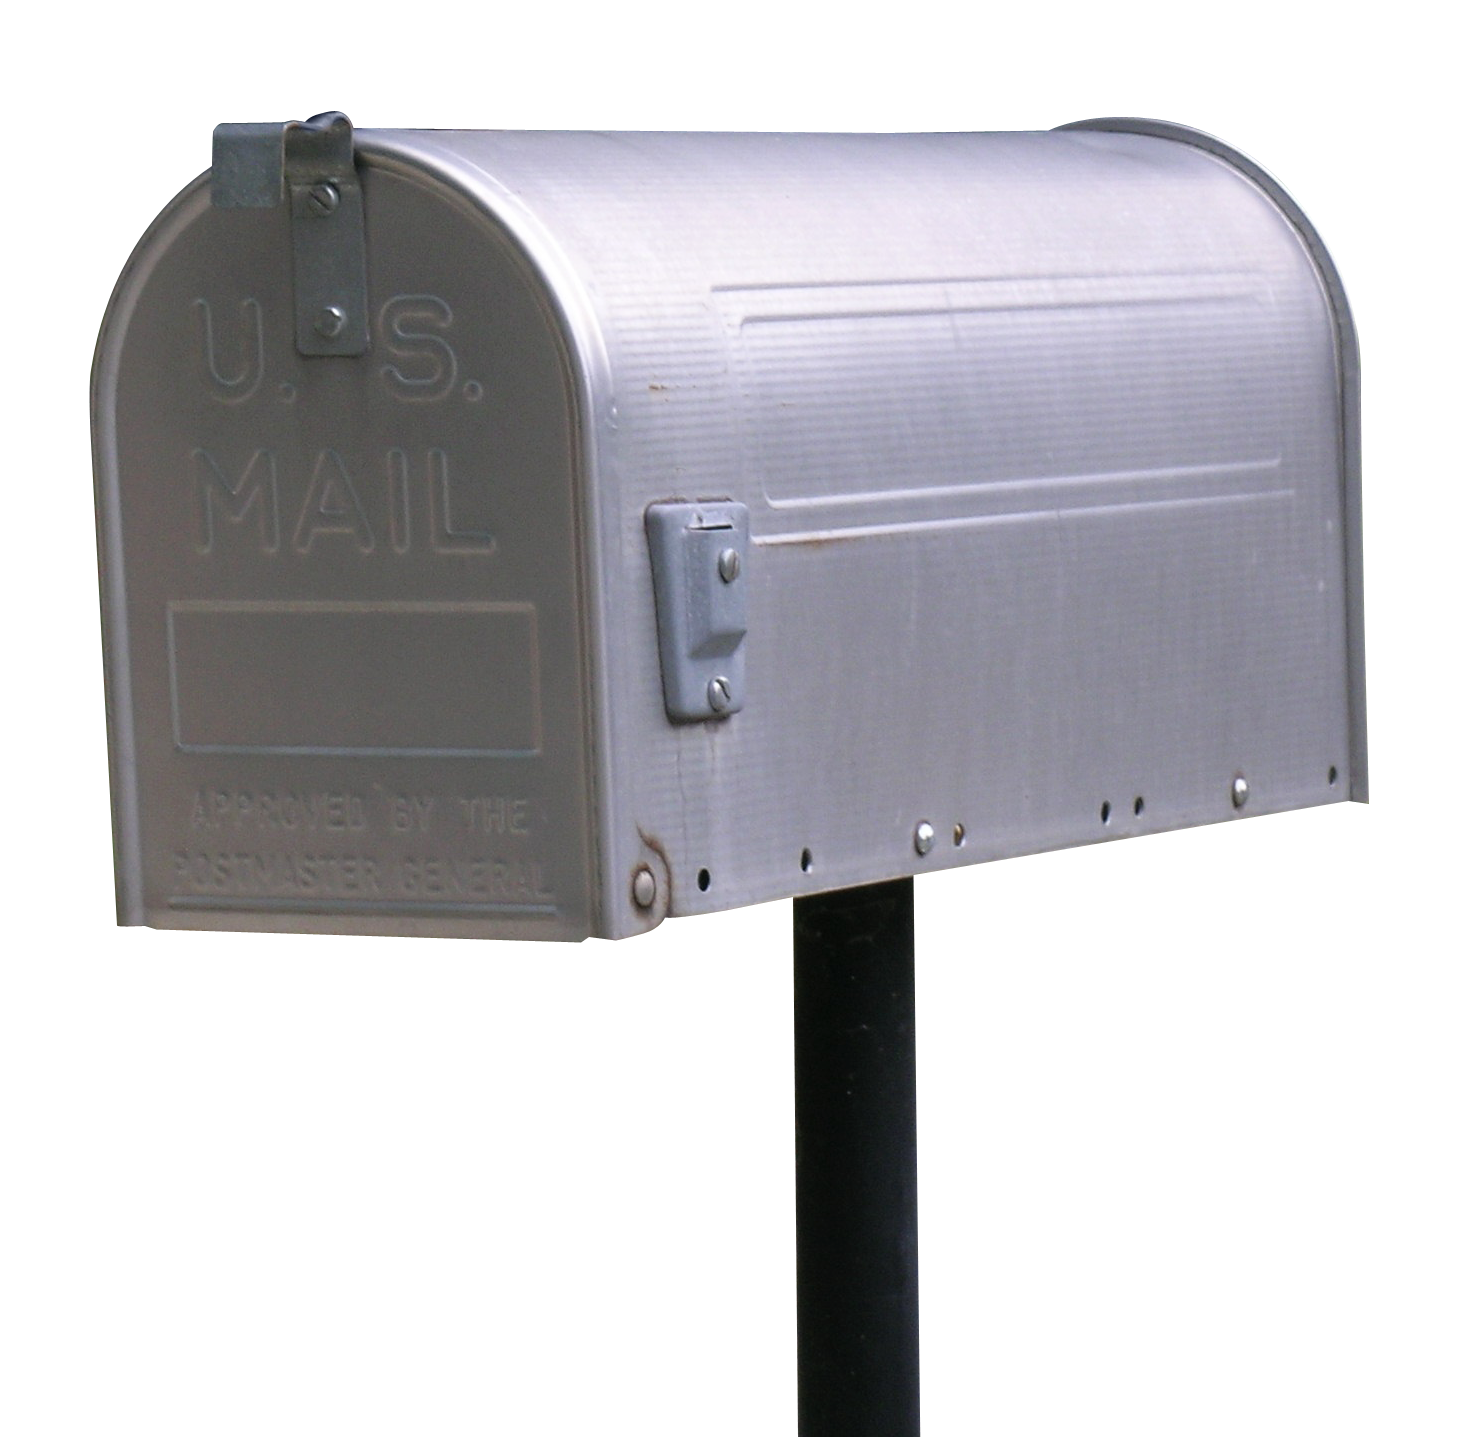 Mailbox sprite 004.png